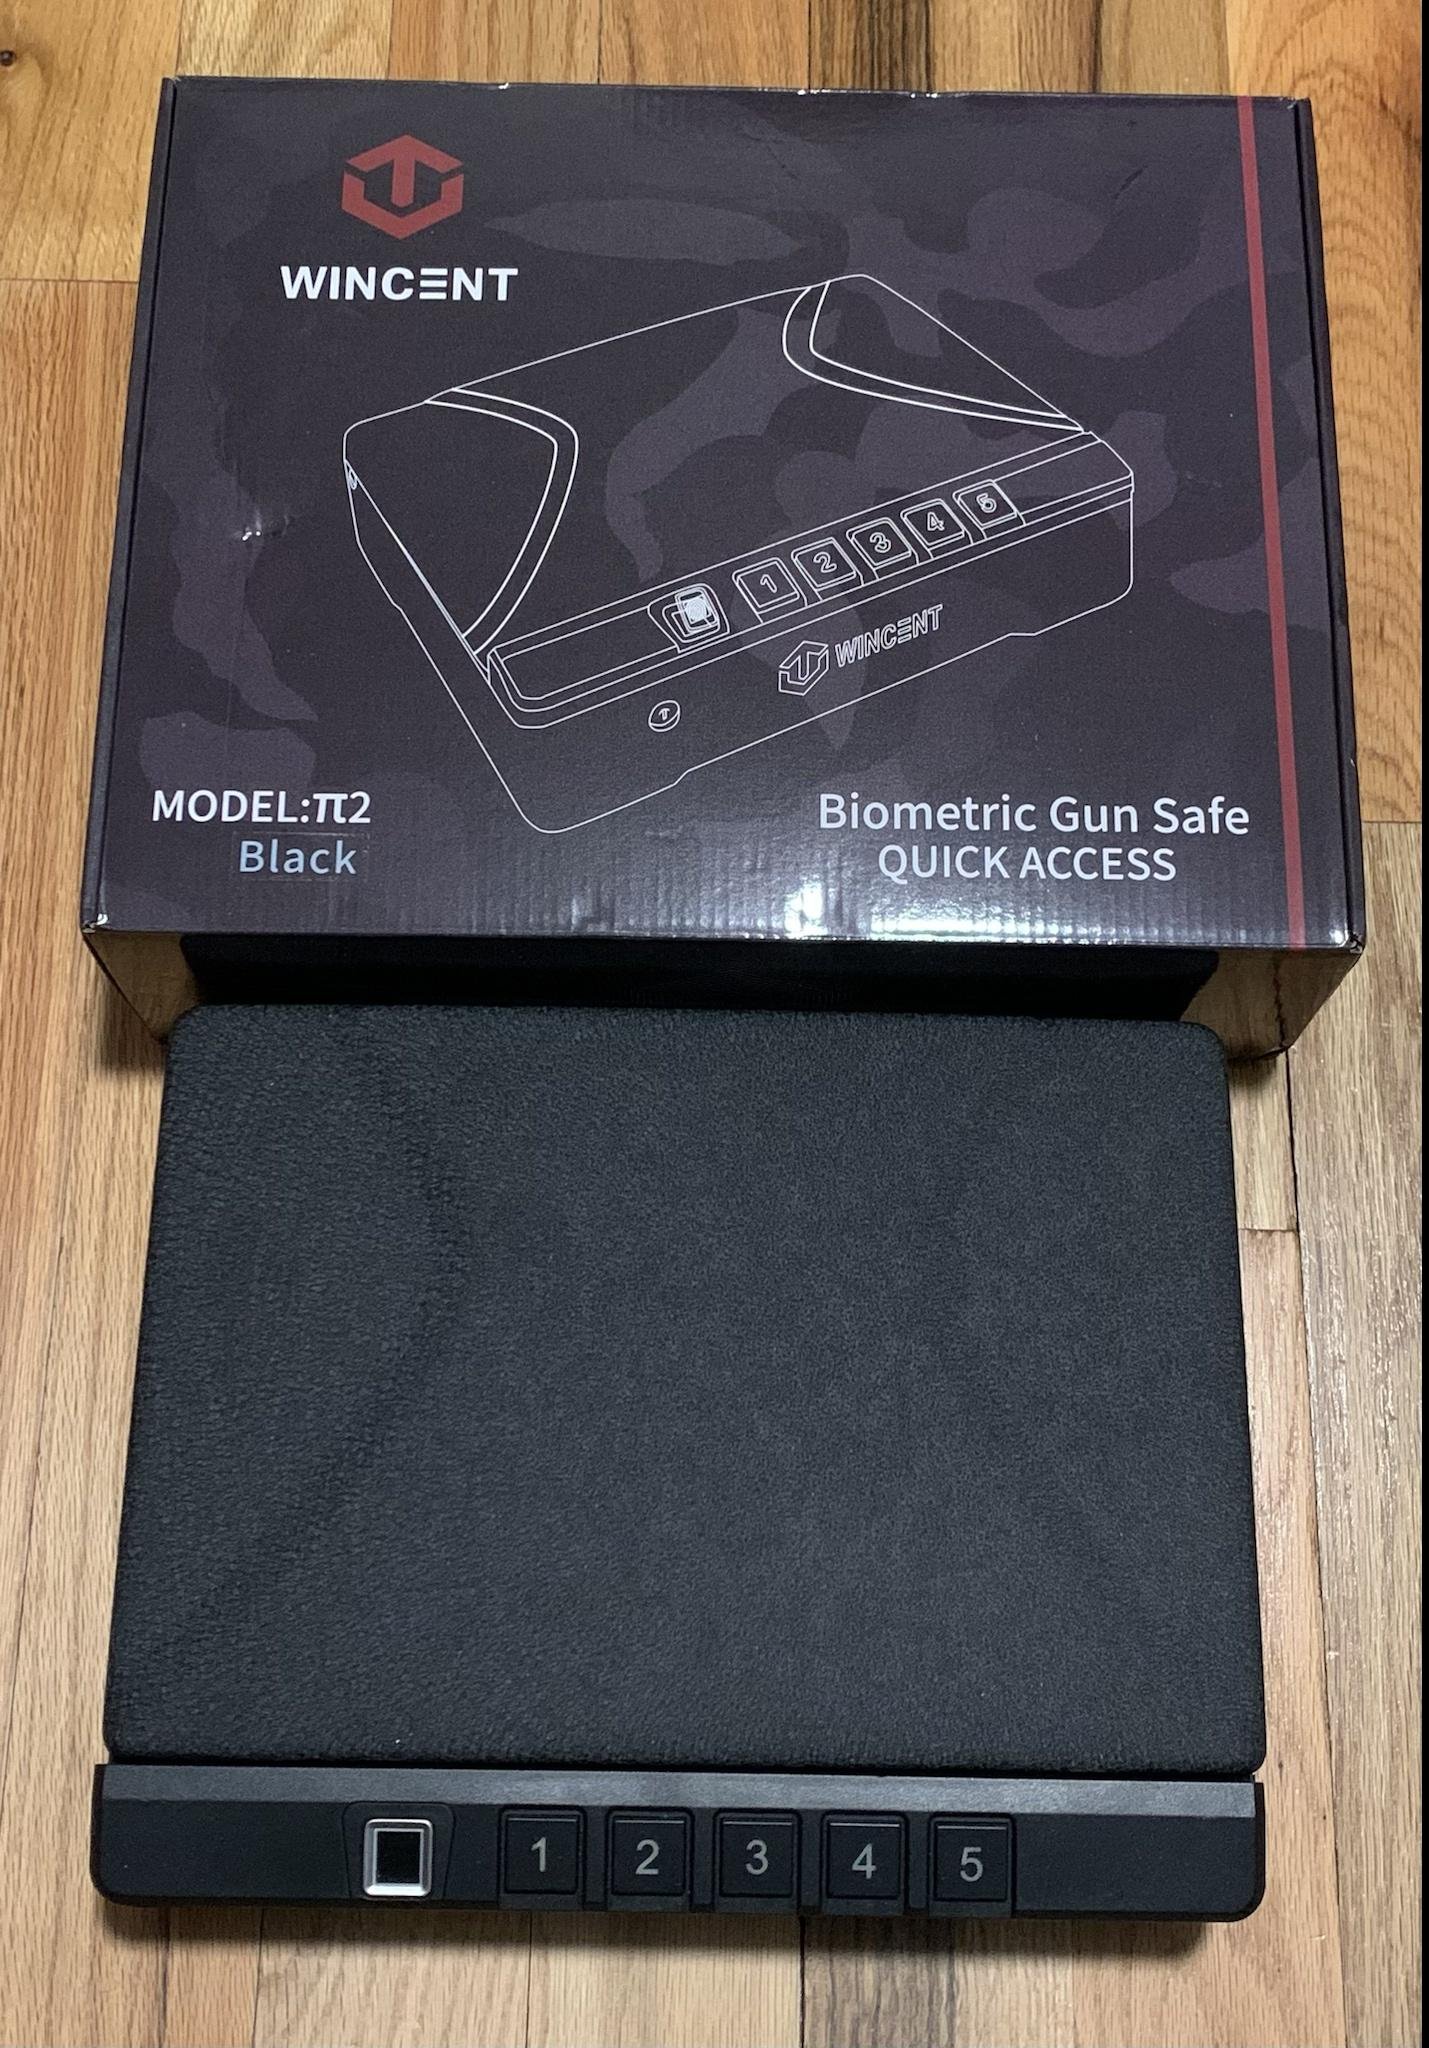 WINCENT Biometric Gun Safe for Pistols V2.0 Review